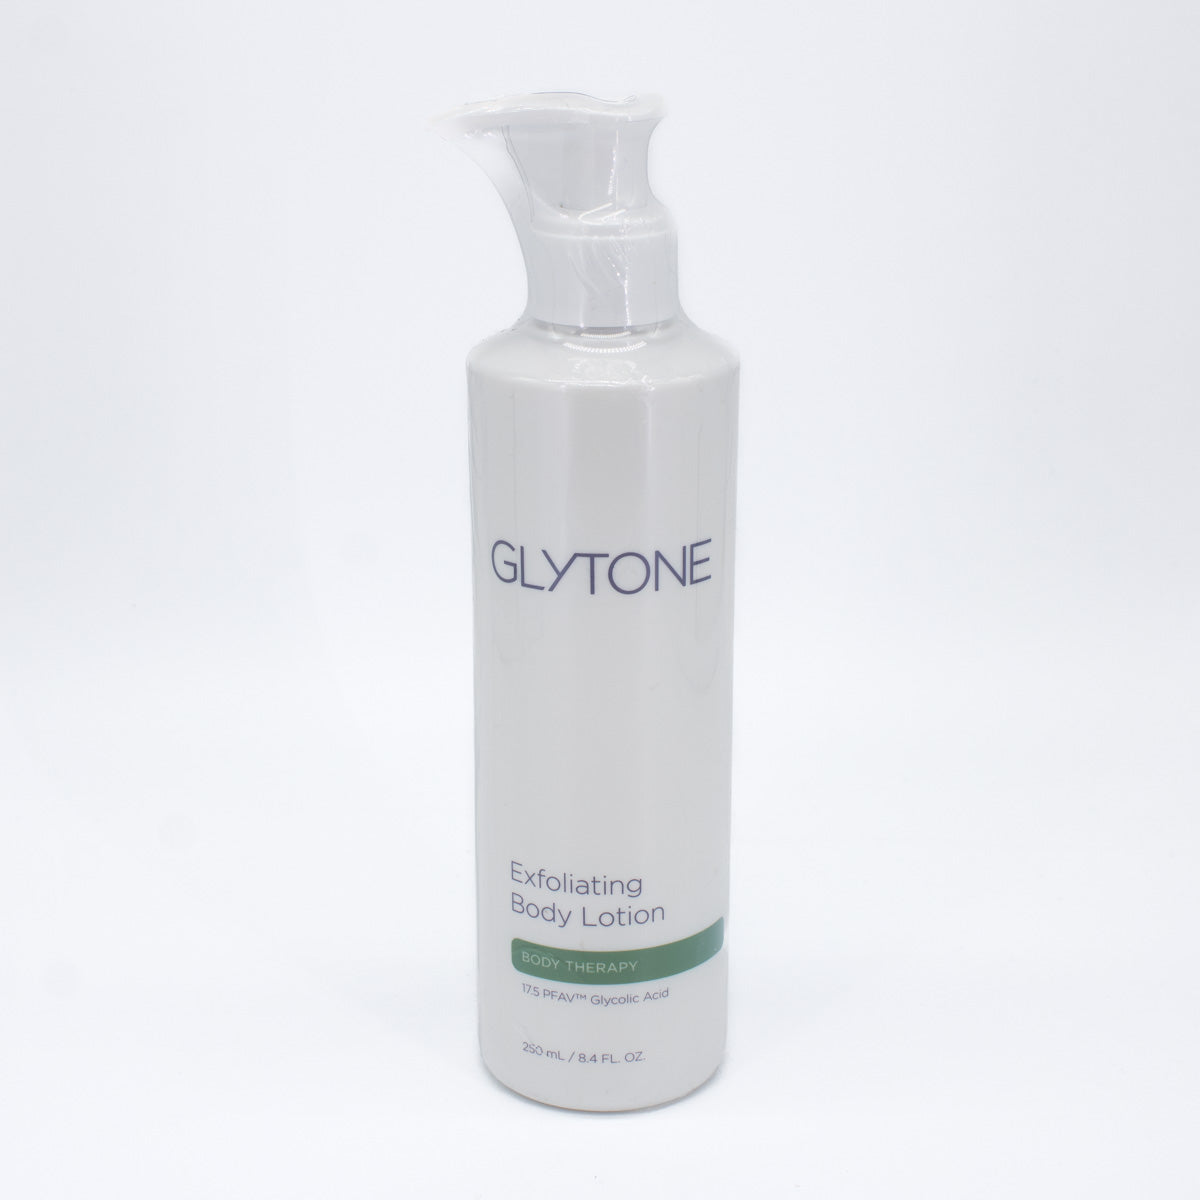 GLYTONE Exfoliating Body Lotion 8.4oz - New